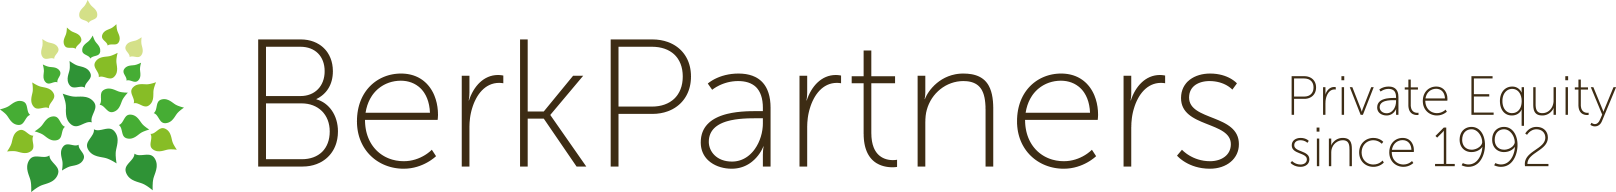 logo-berkpartners-logo